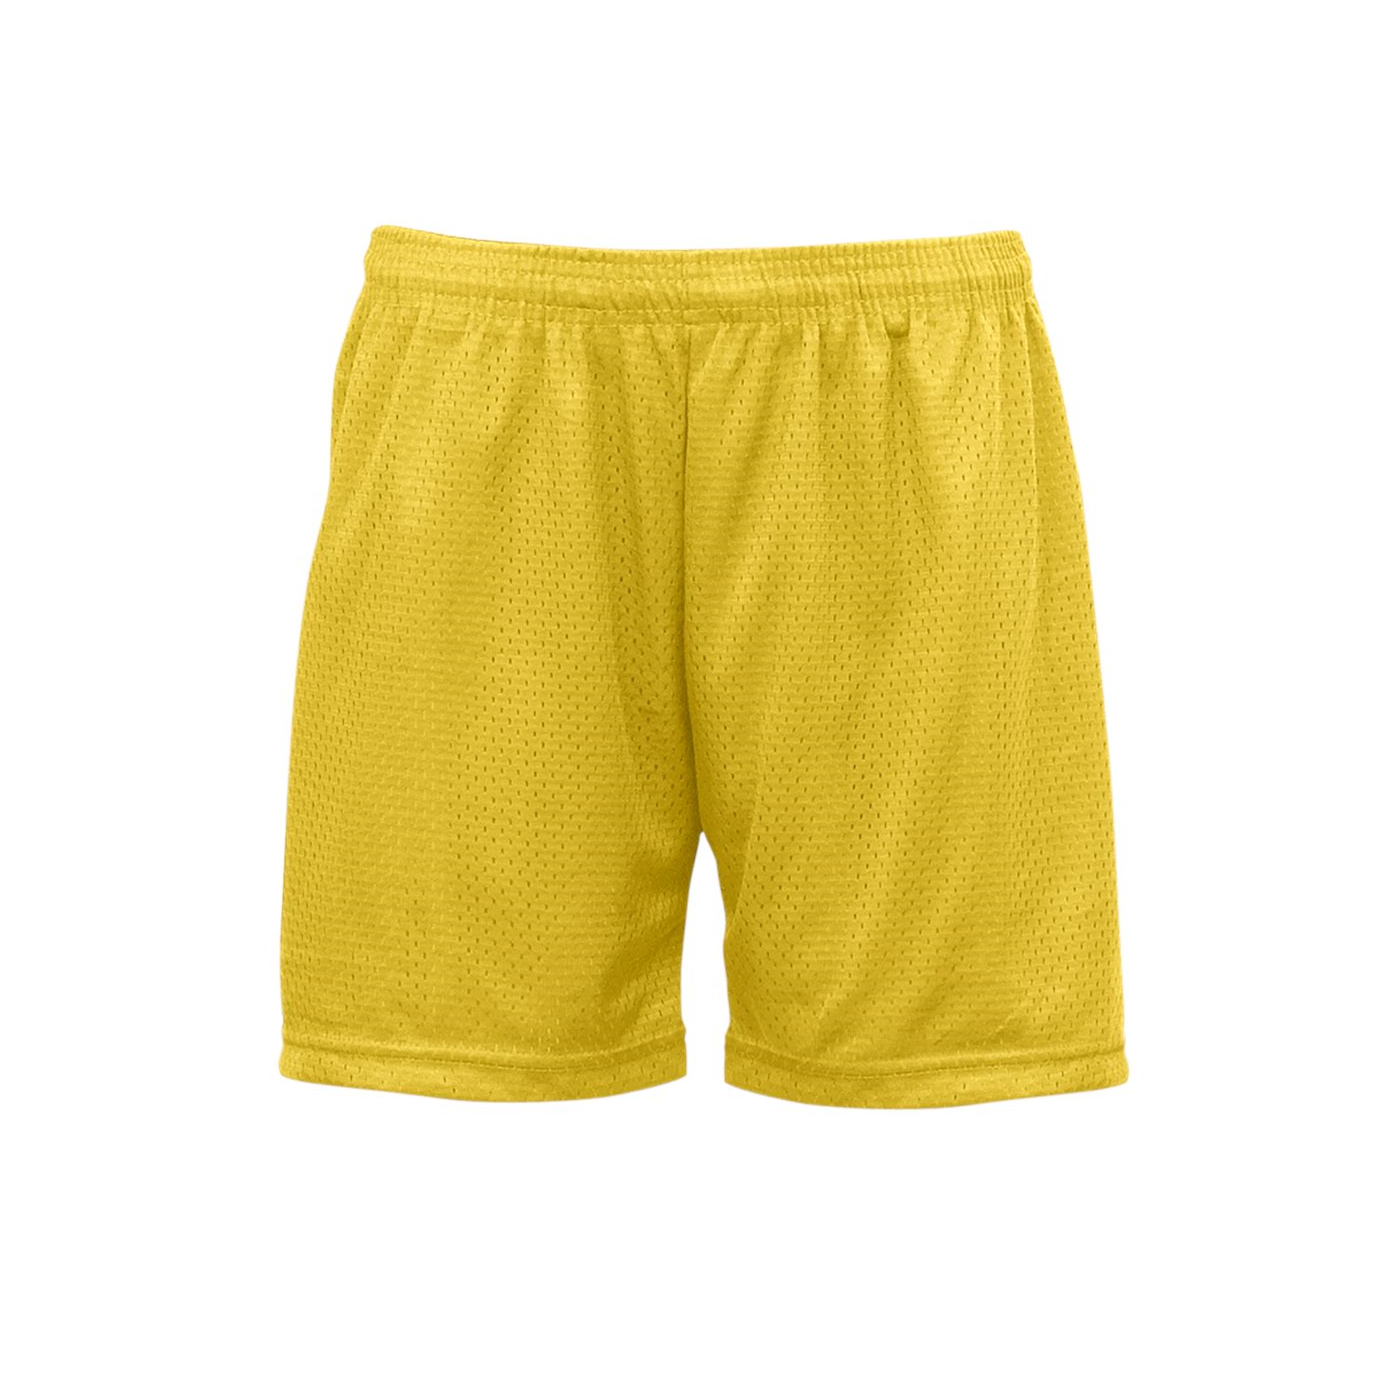 LRG Original Roots Mesh Shorts - Yellow